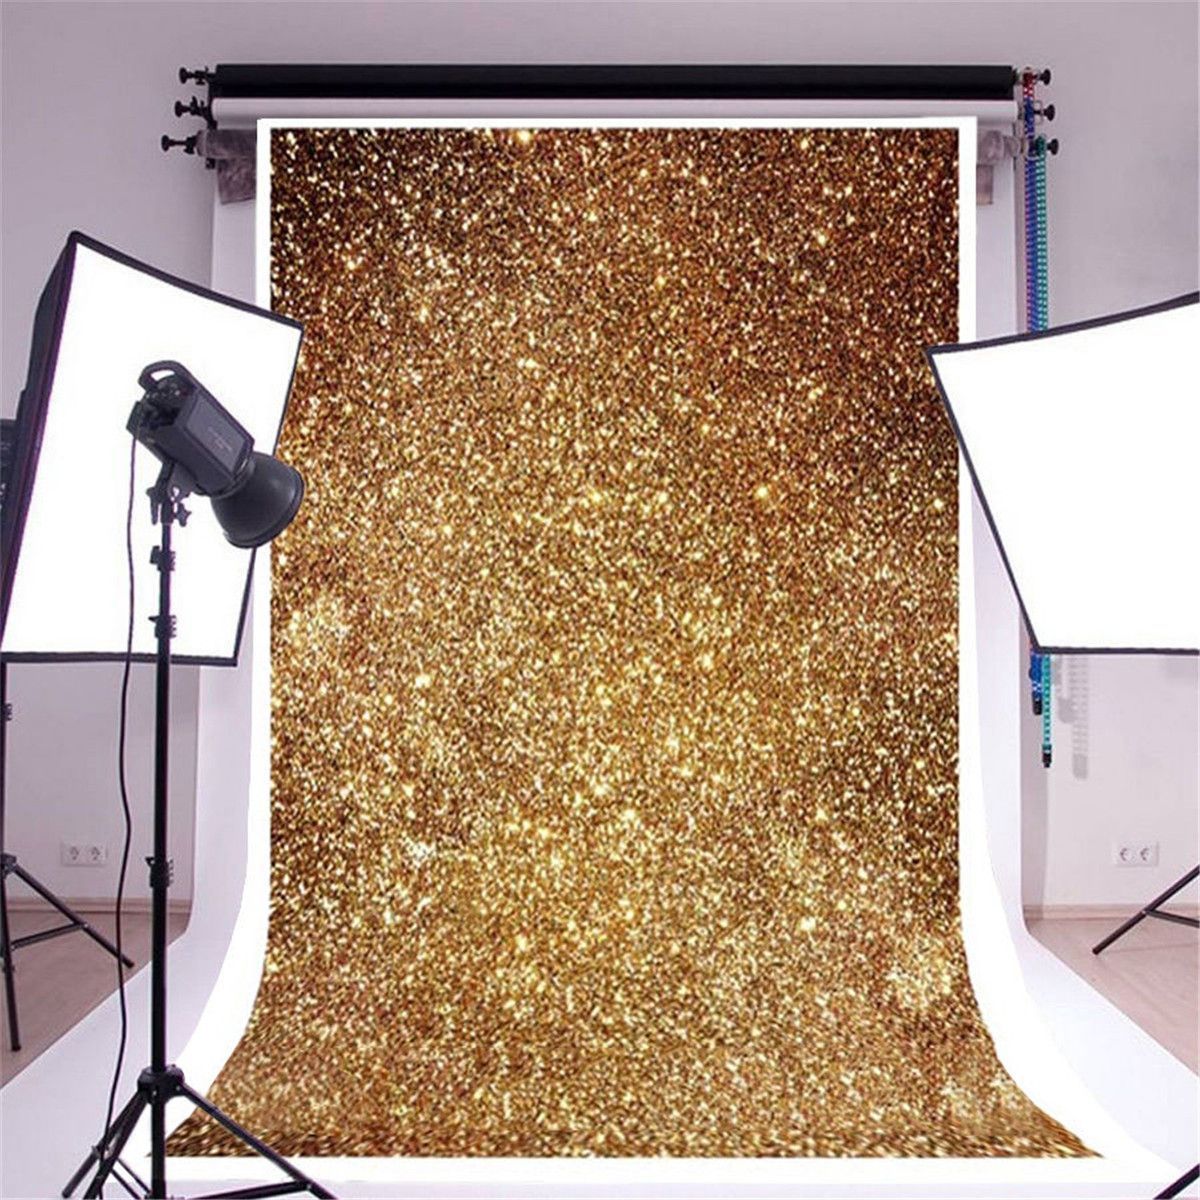 3X5ft-Vinyl-Golden-Glitters-Photography-Background-Backdrop-Photo-Studio-Prop-1152947